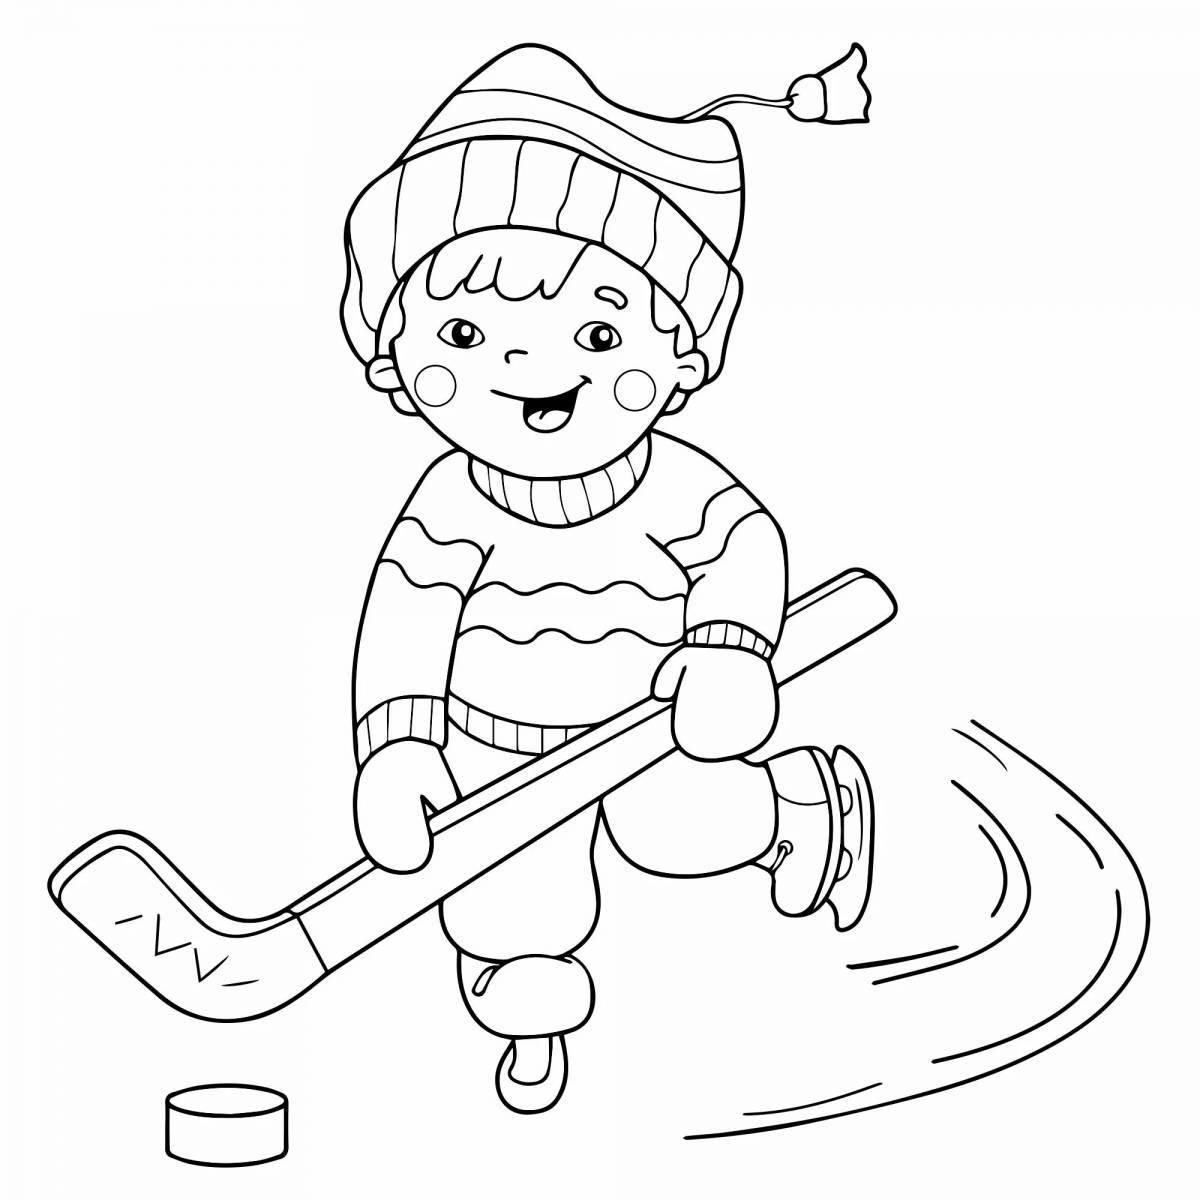 Fun coloring book winter sports